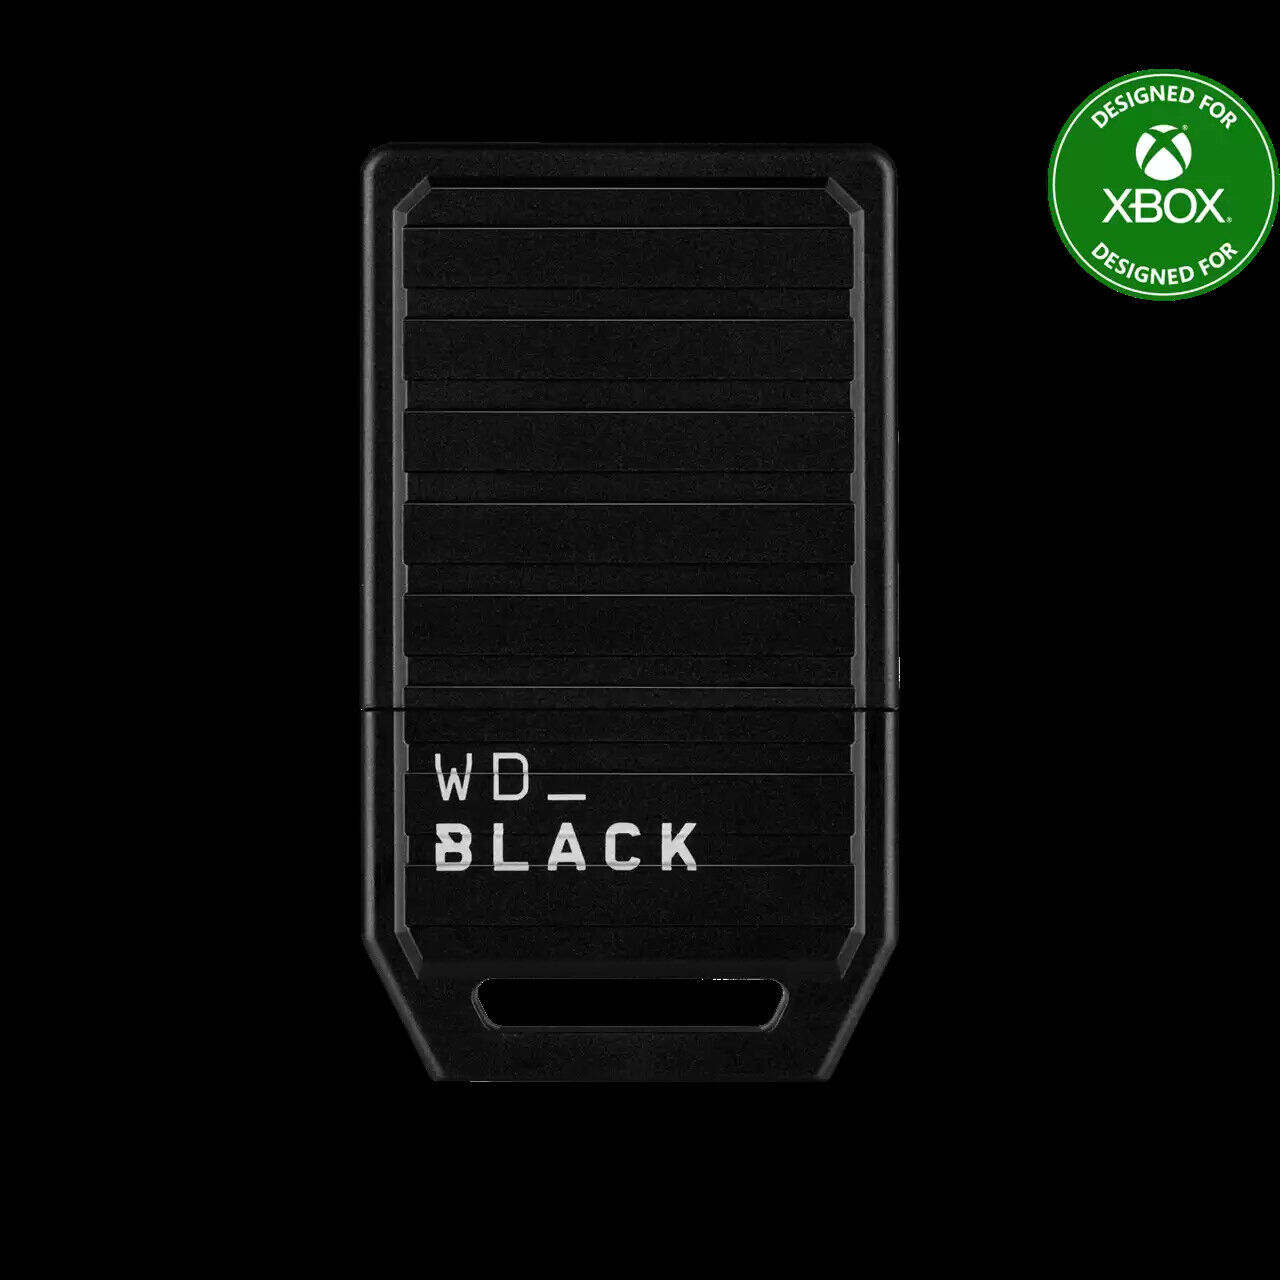 WD_BLACK 1TB C50 Expansion Card for Xbox, External SSD - WDBMPH0010BNC-WCSN